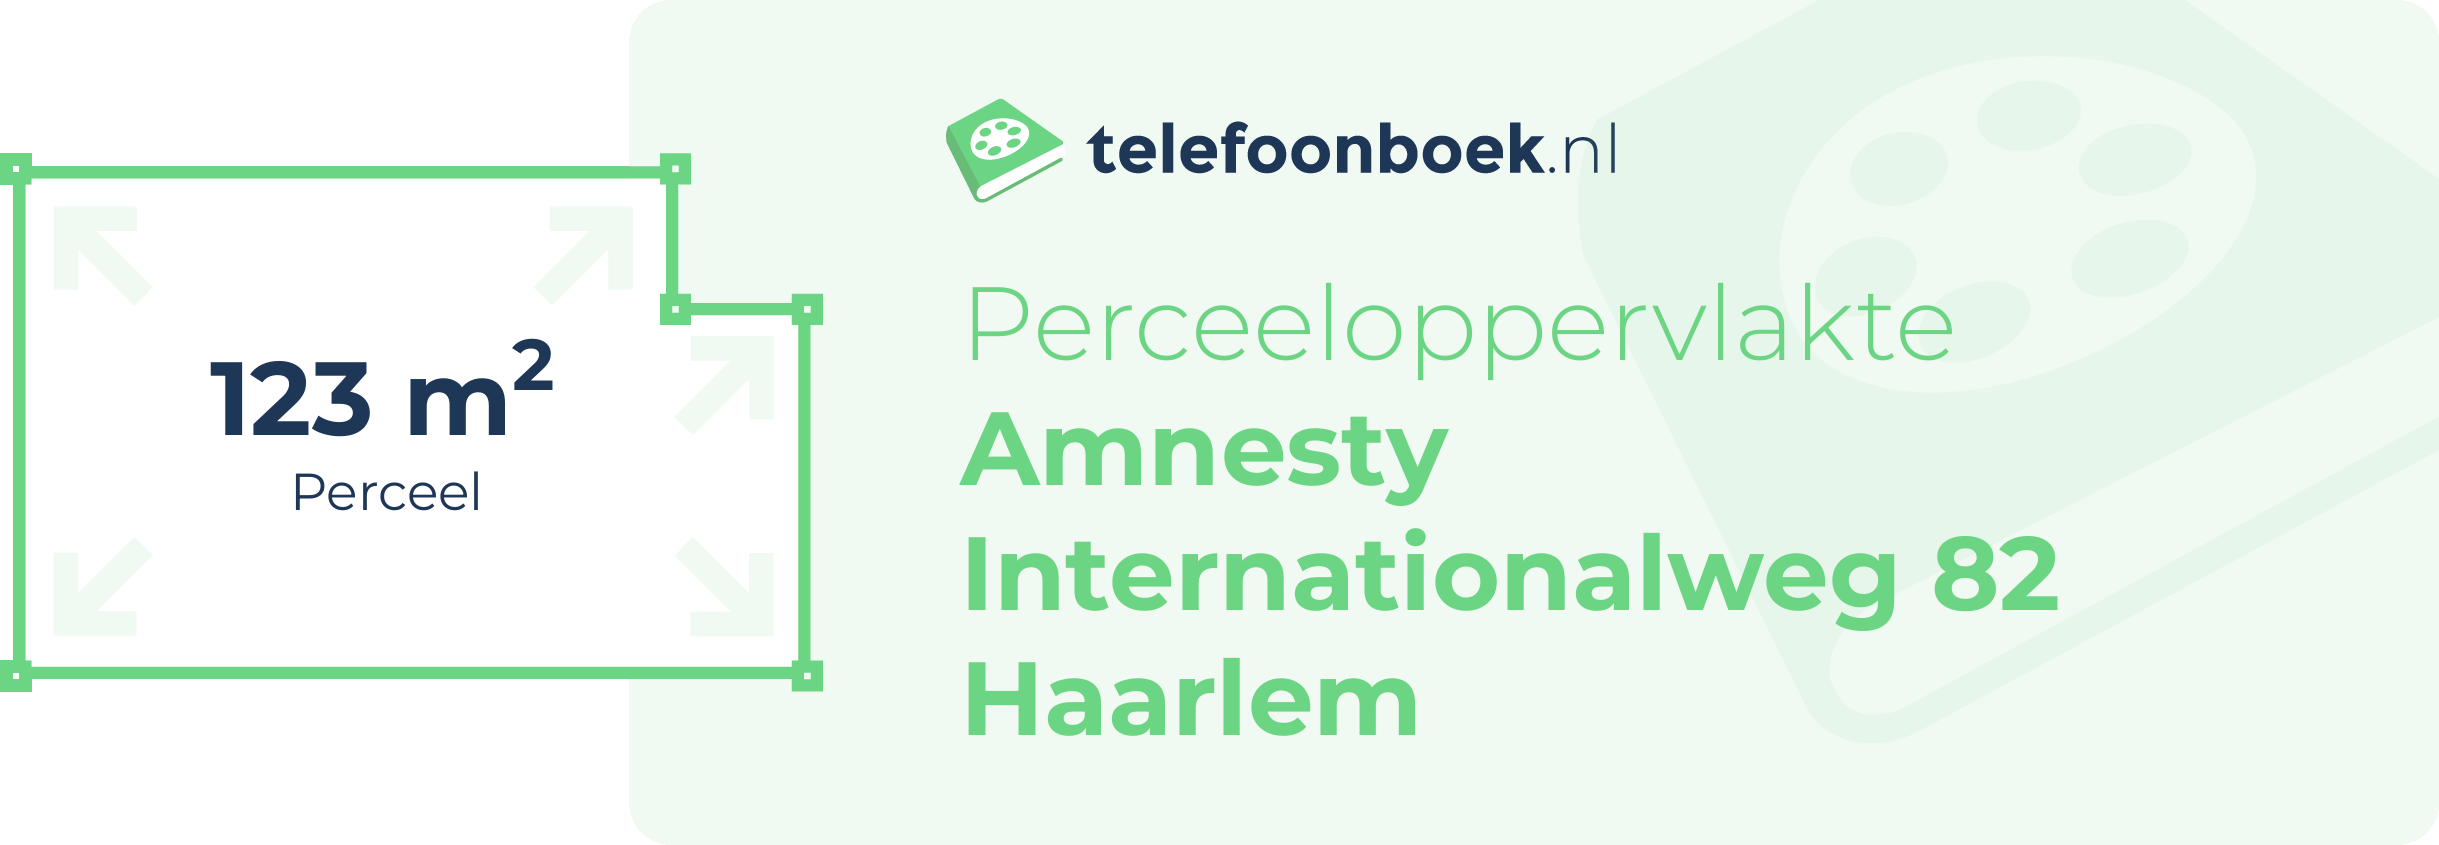 Perceeloppervlakte Amnesty Internationalweg 82 Haarlem